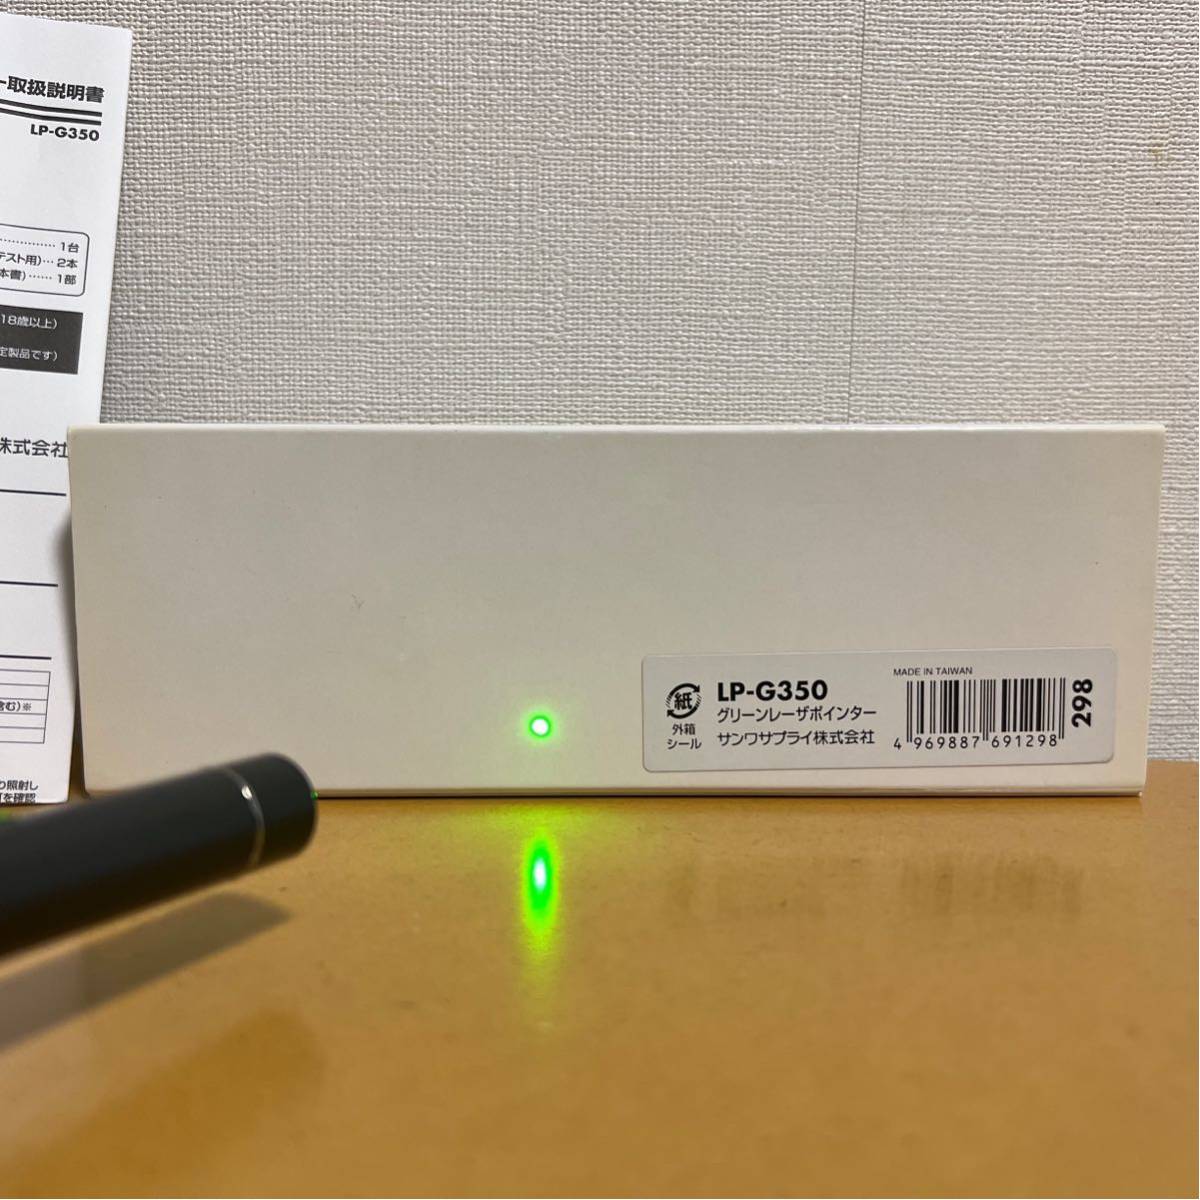 [ ultimate beautiful goods ]SANWA SUPPLY green laser pointer LP-G350 Sanwa Supply green color Green Laser Pointer